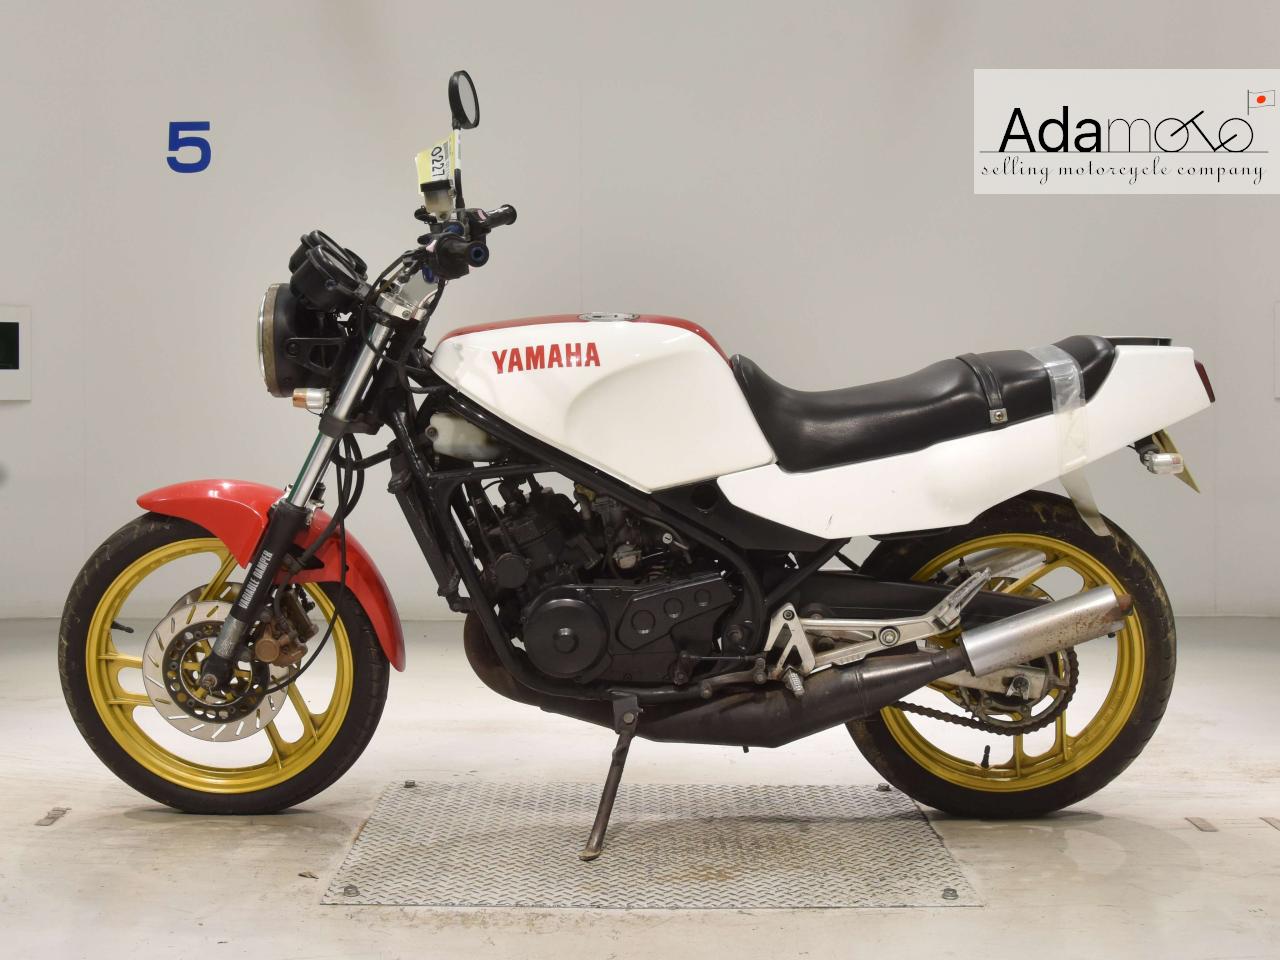 Yamaha RZ250R - Adamoto - Motorcycles from Japan